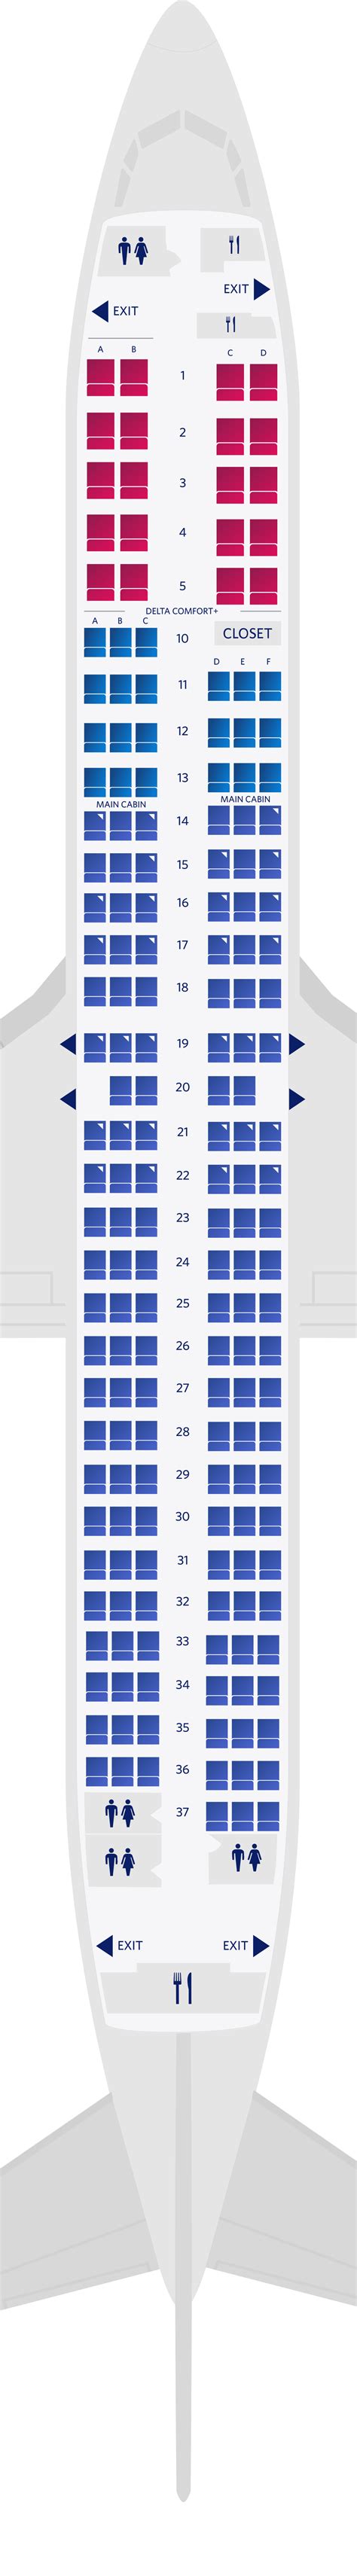 Delta 737 800 Seat Map Elcho Table